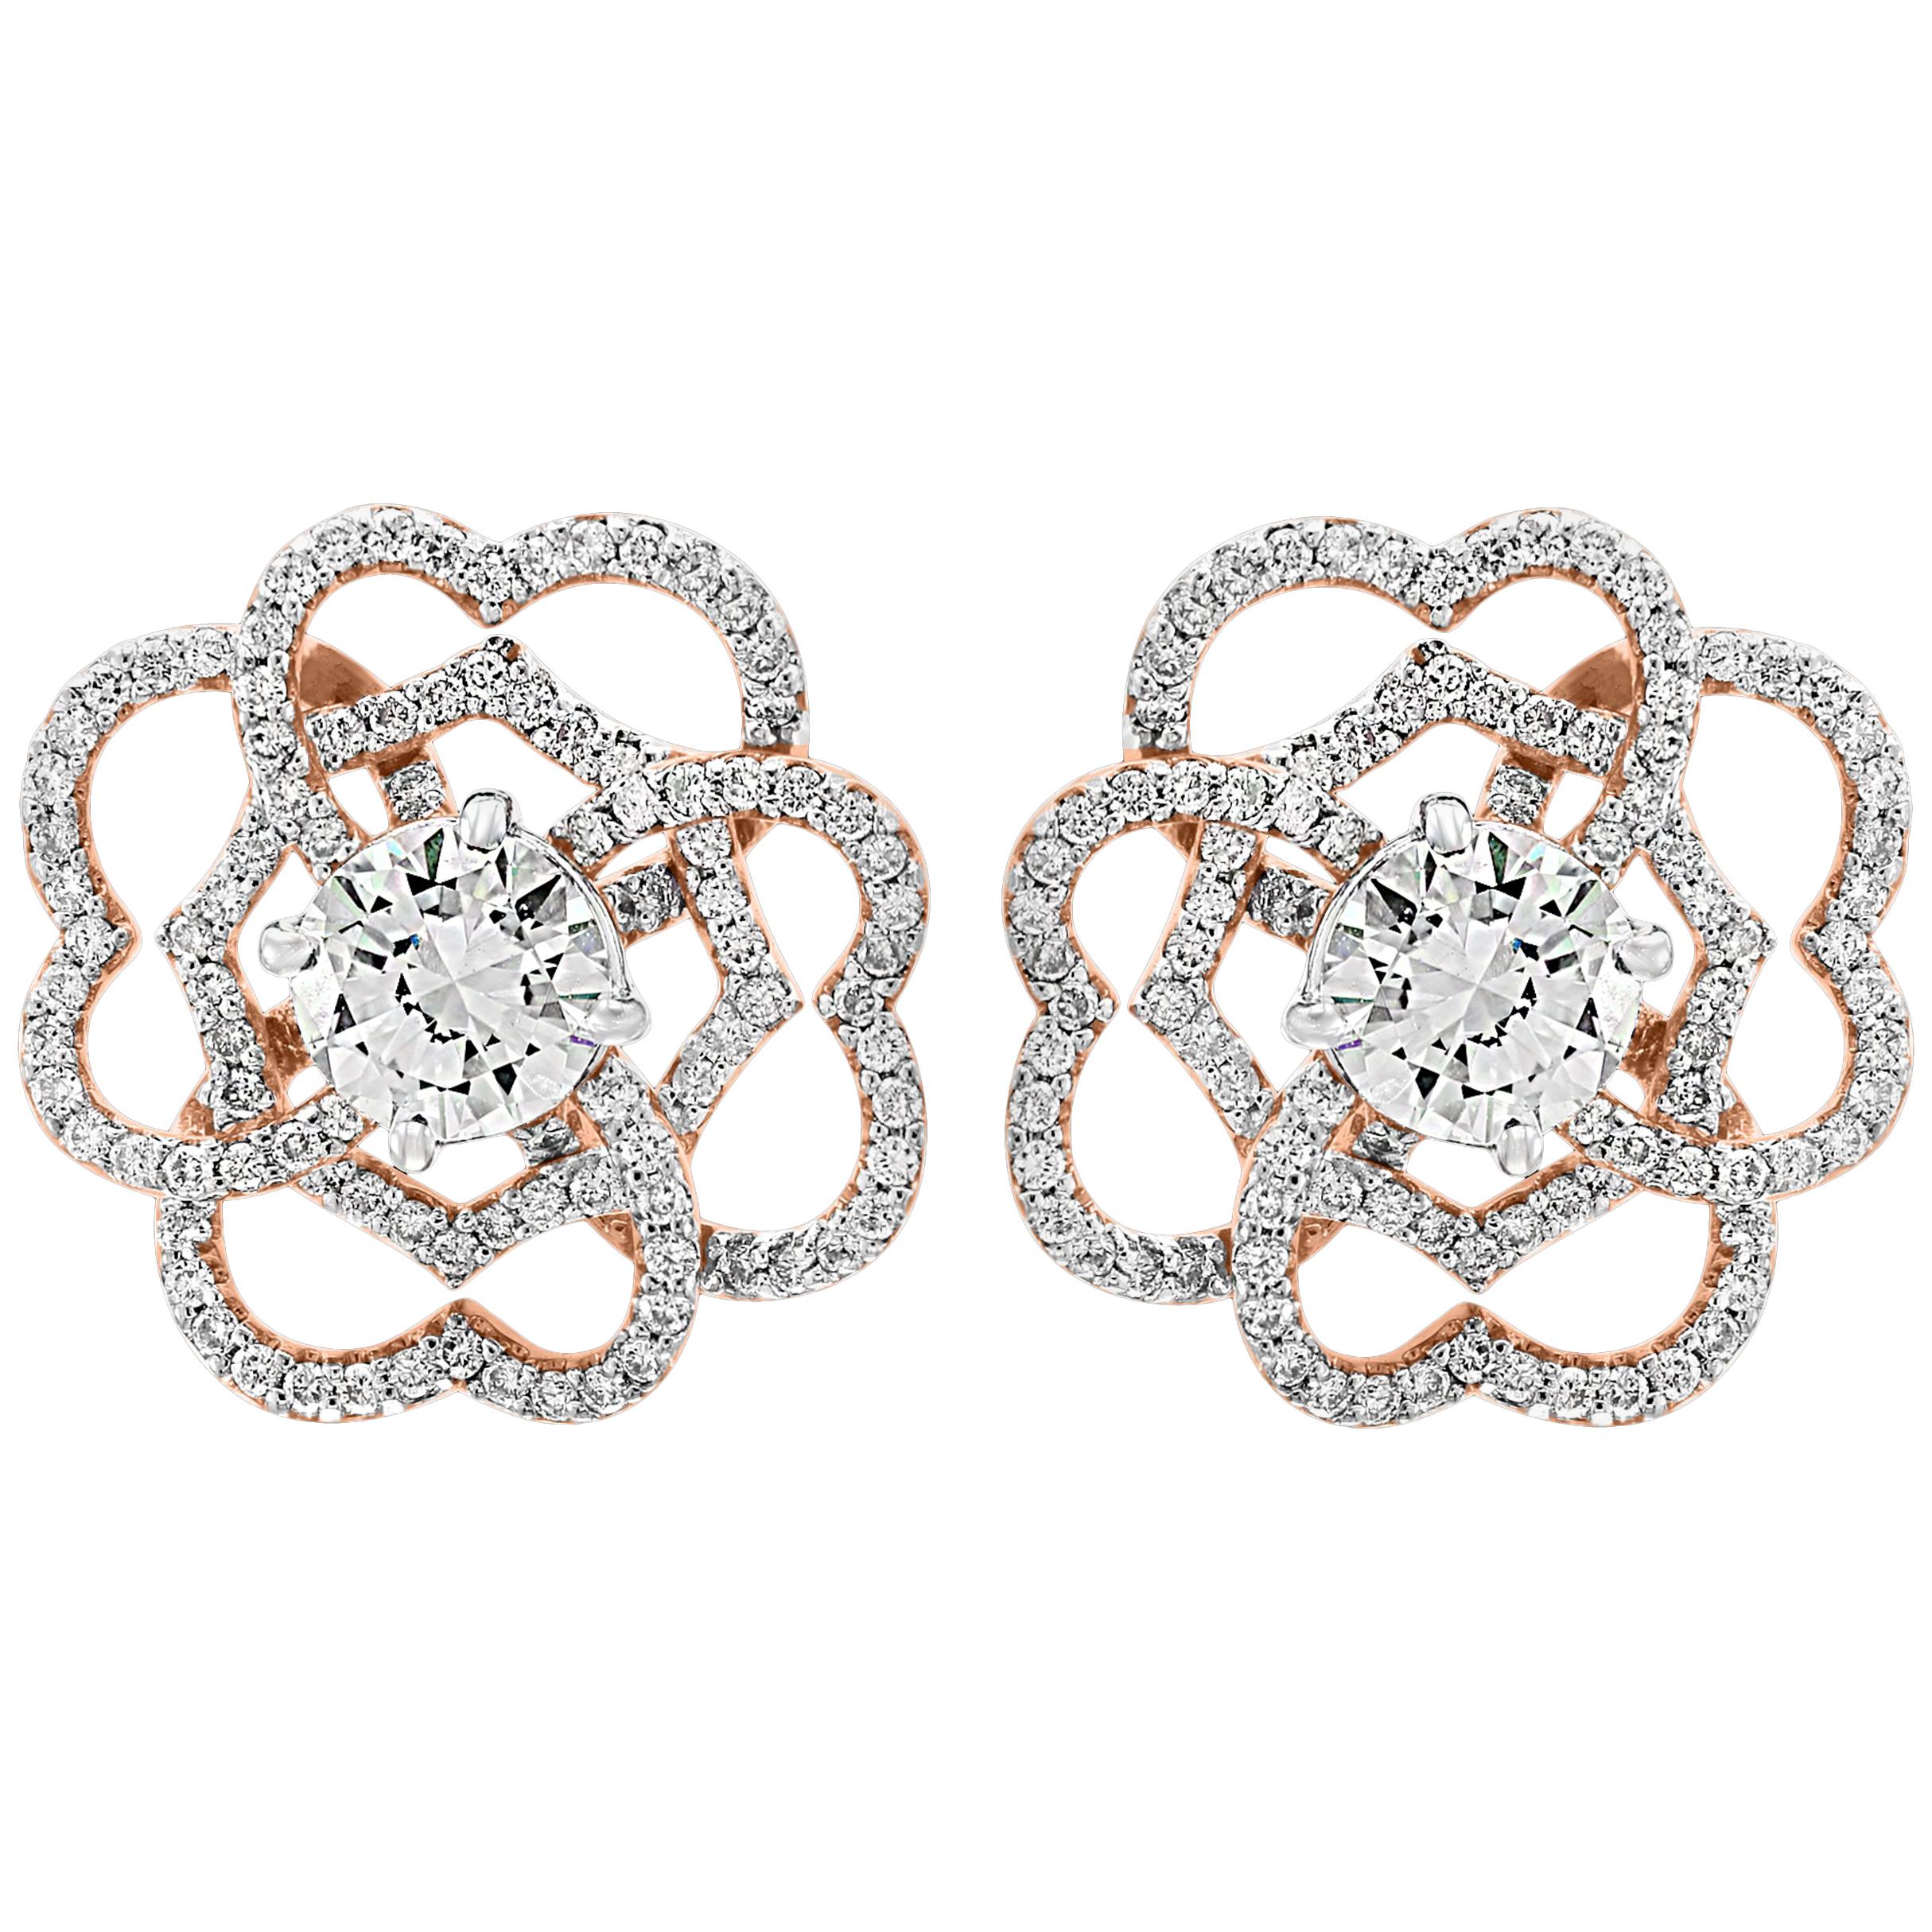 1 Carat Each Solitaire Centre Diamond Flower/Cluster Earring 14 Karat Rose Gold